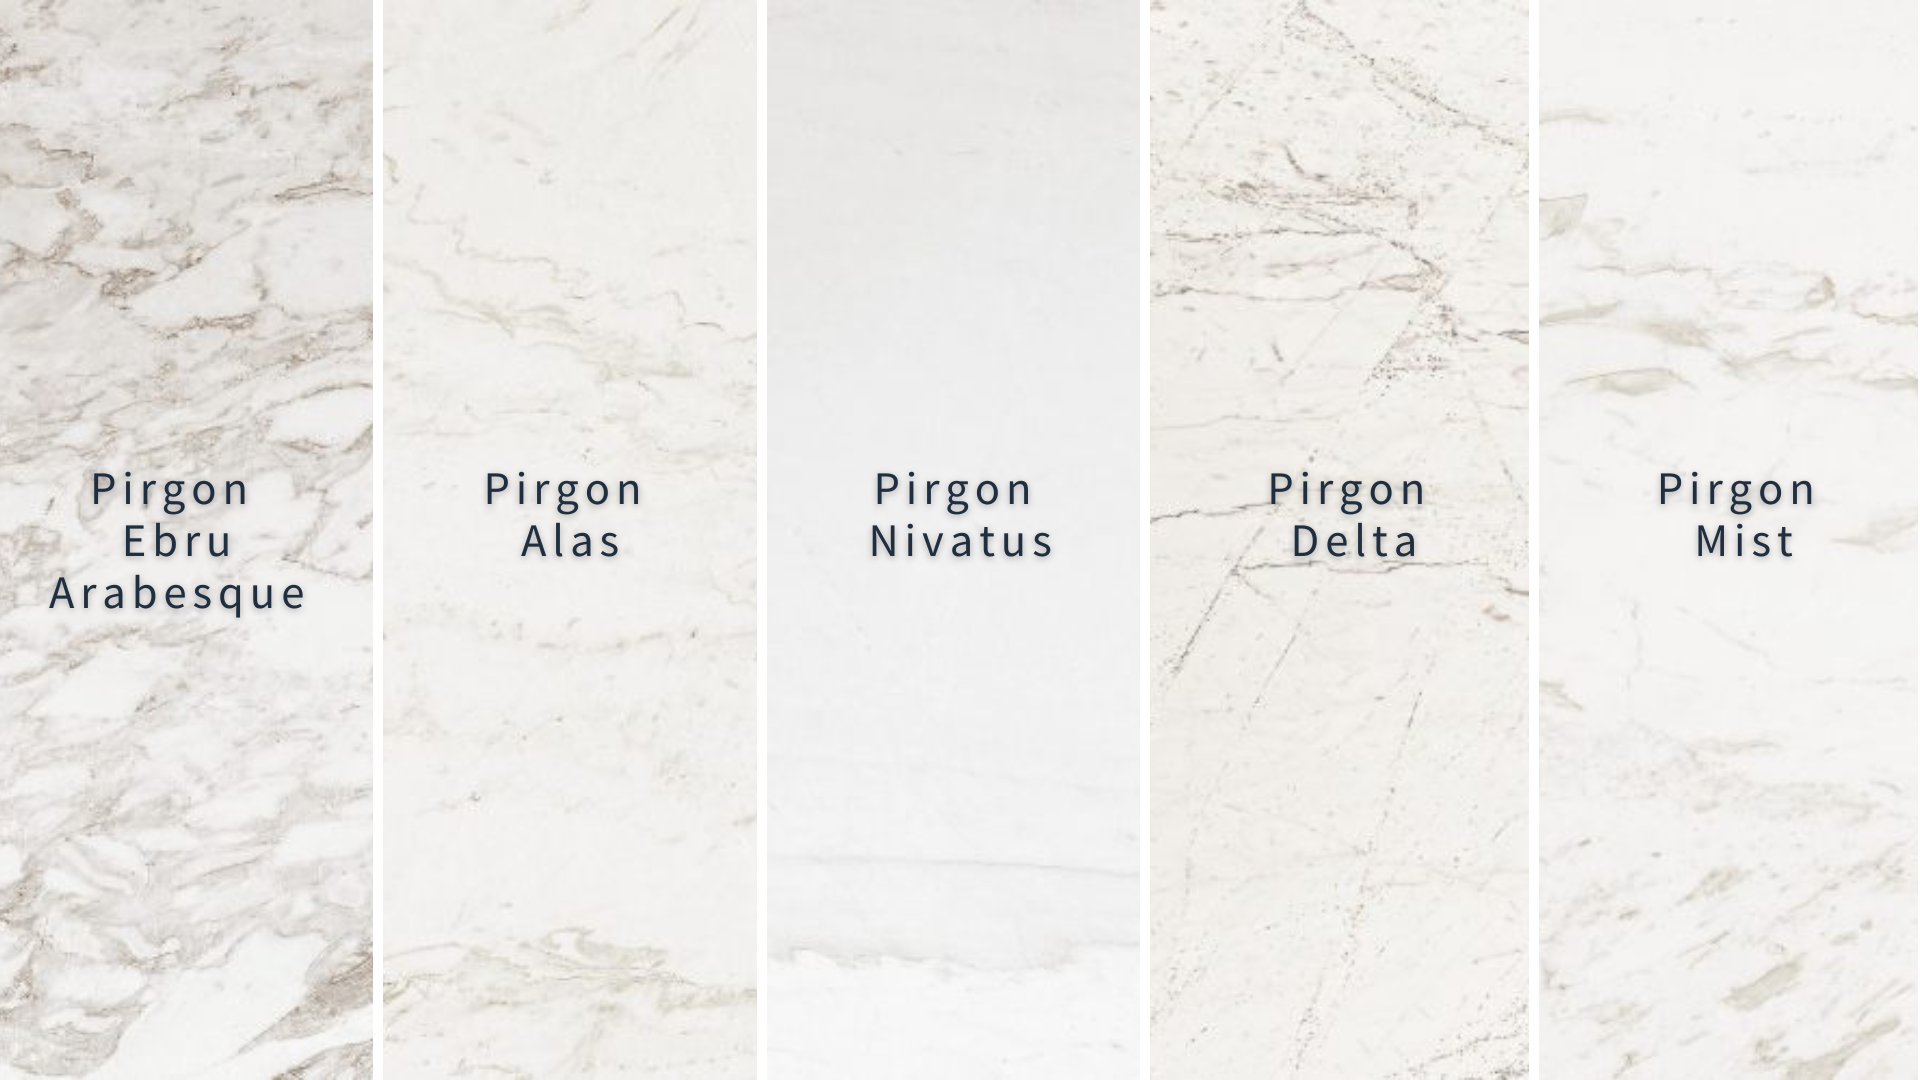 Image of samples of 5 white marble slabs with veins – Pirgon, Ebru Arabesque, Alas, Nivatus, Delta, Mist